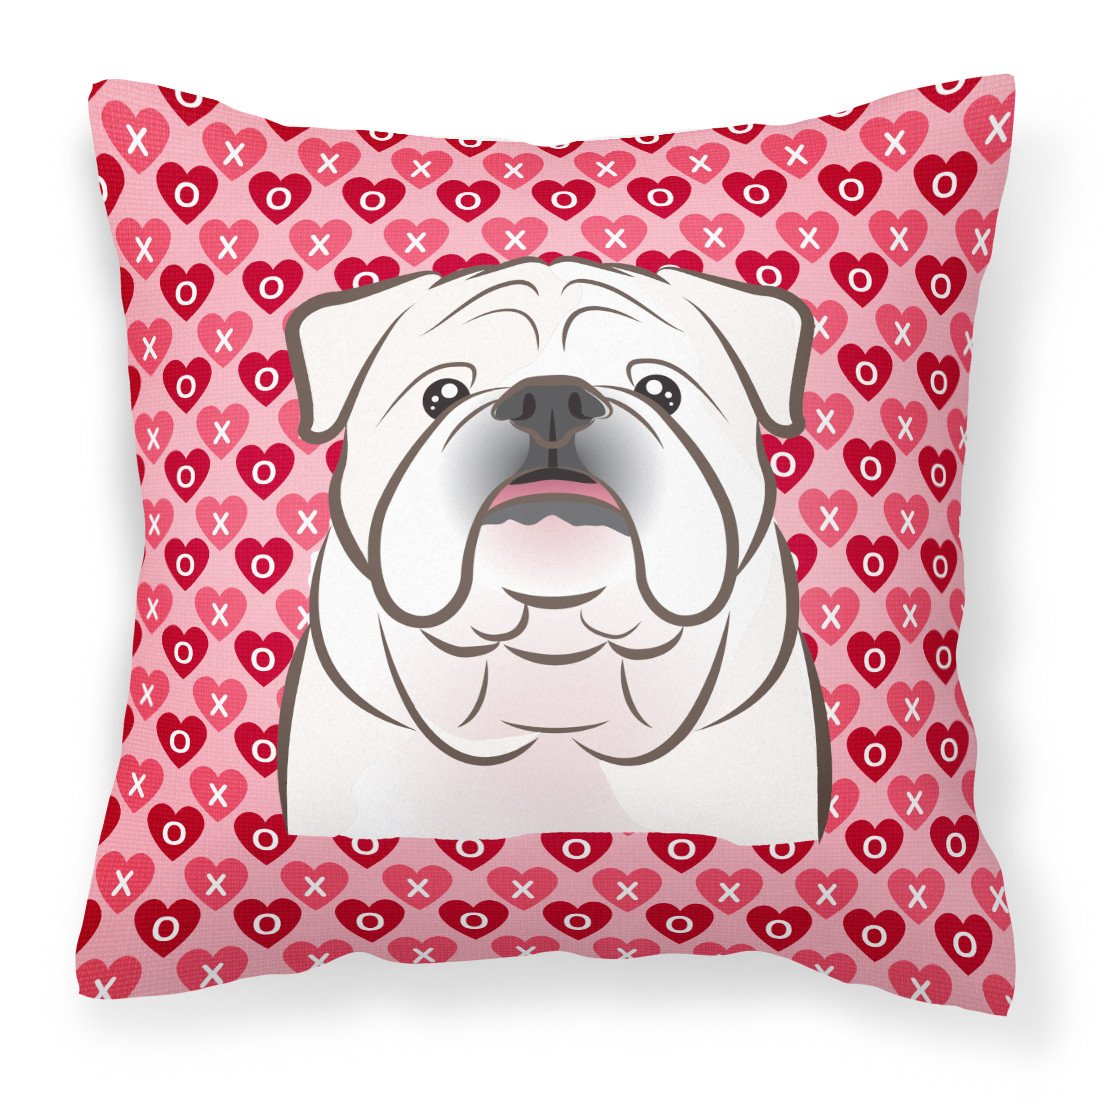 White English Bulldog  Hearts Fabric Decorative Pillow BB5290PW1818 by Caroline's Treasures